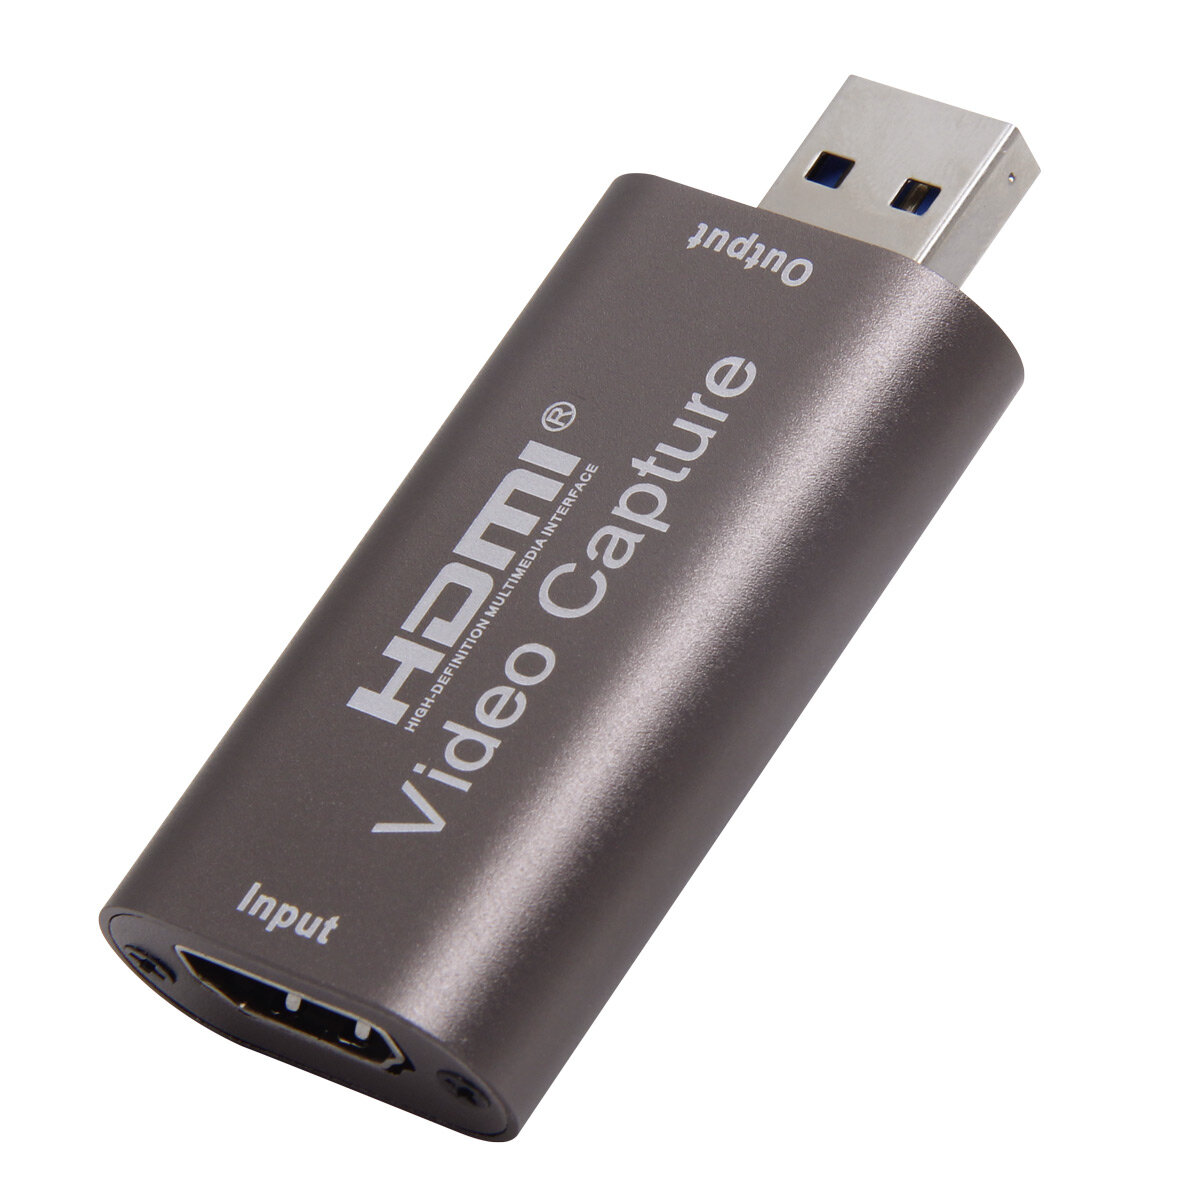 Mini USB 3.0 HD 1080P 60Hz HDMI a USB Tarjeta de captura de video Grabación de juegos Caja para YouTube Transmisión en v